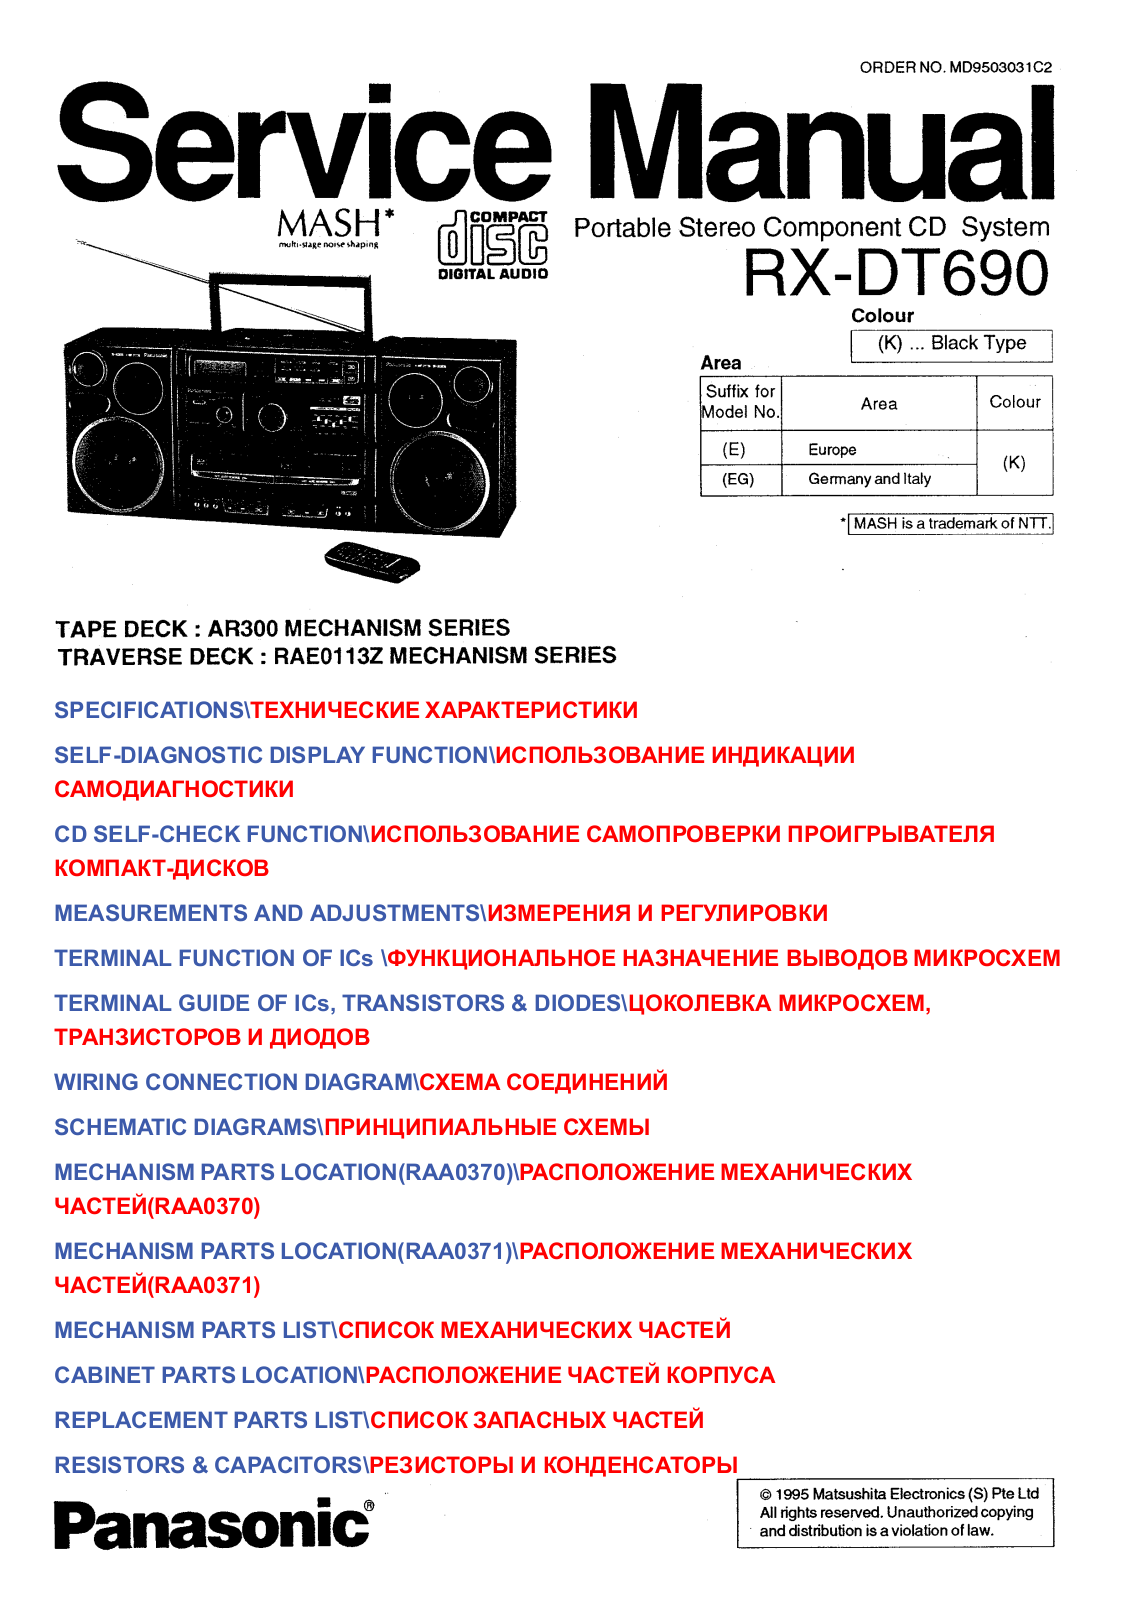 Panasonic RX-DT690 Service manual